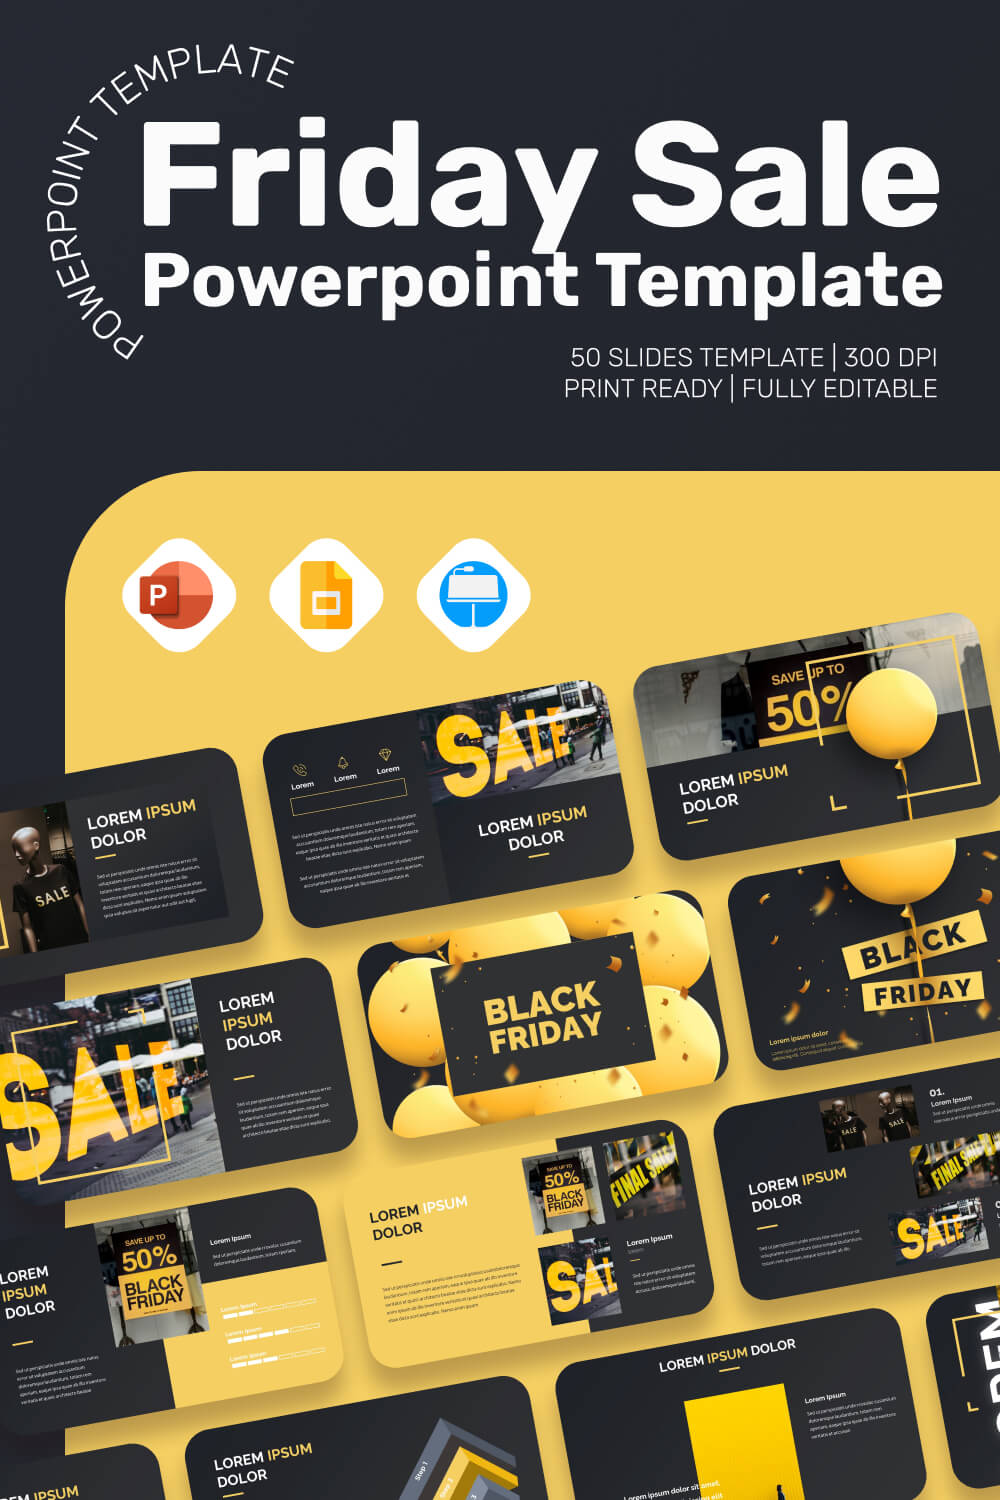 Black Friday Promo PowerPoint Template: 50 Slides Pinterest images.